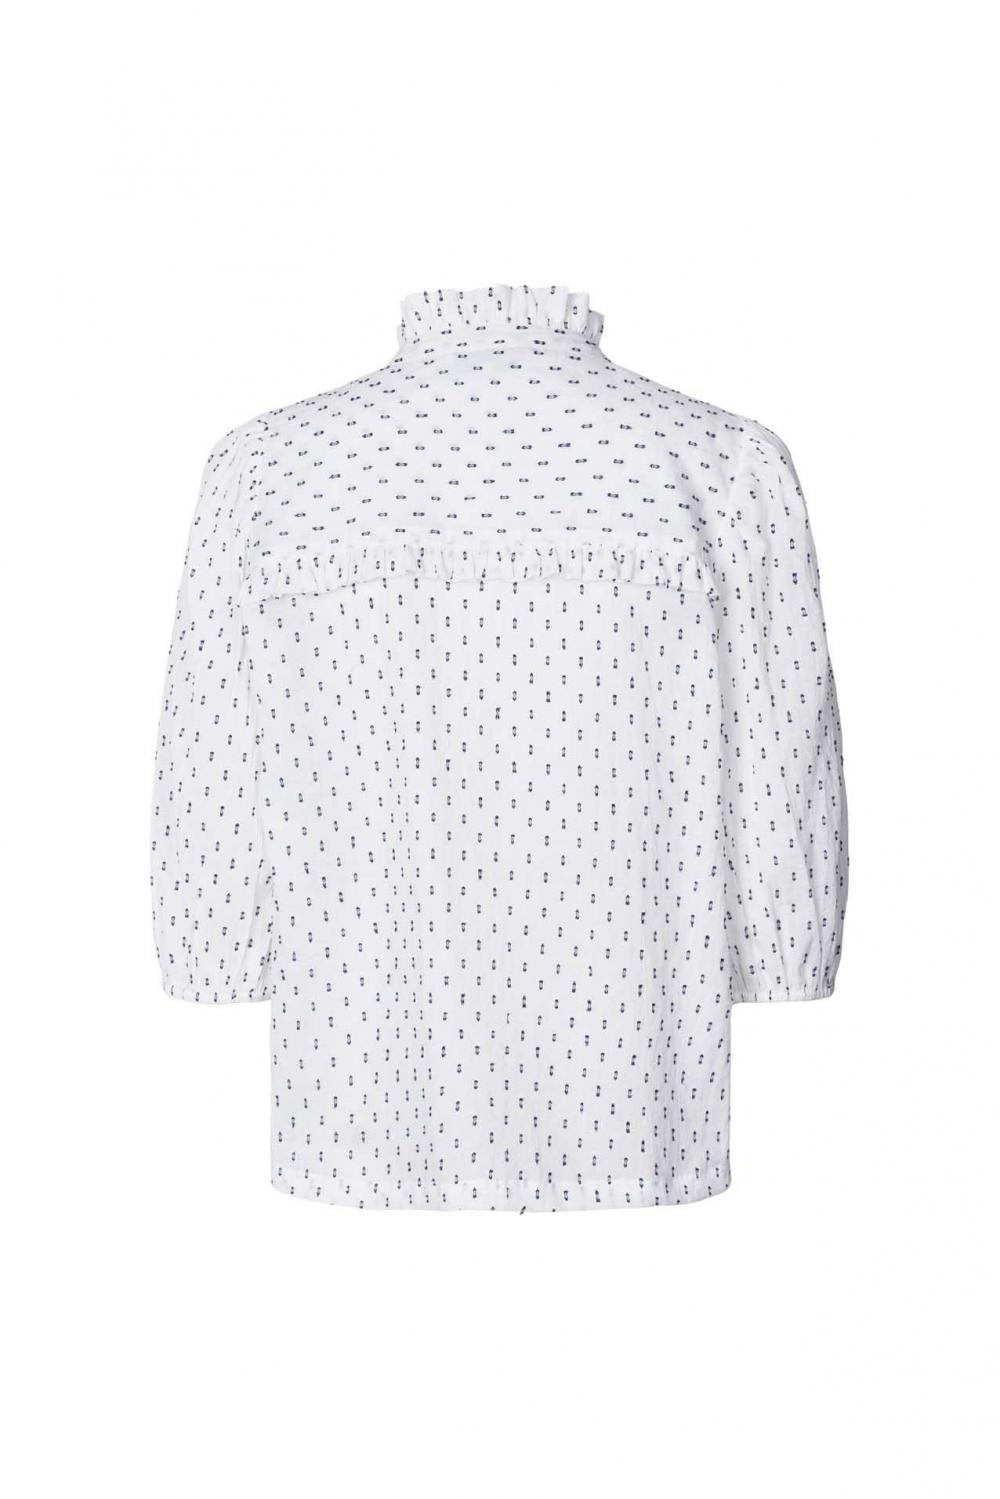 Dame Perth Shirt White | Lollys Laundry Bluser